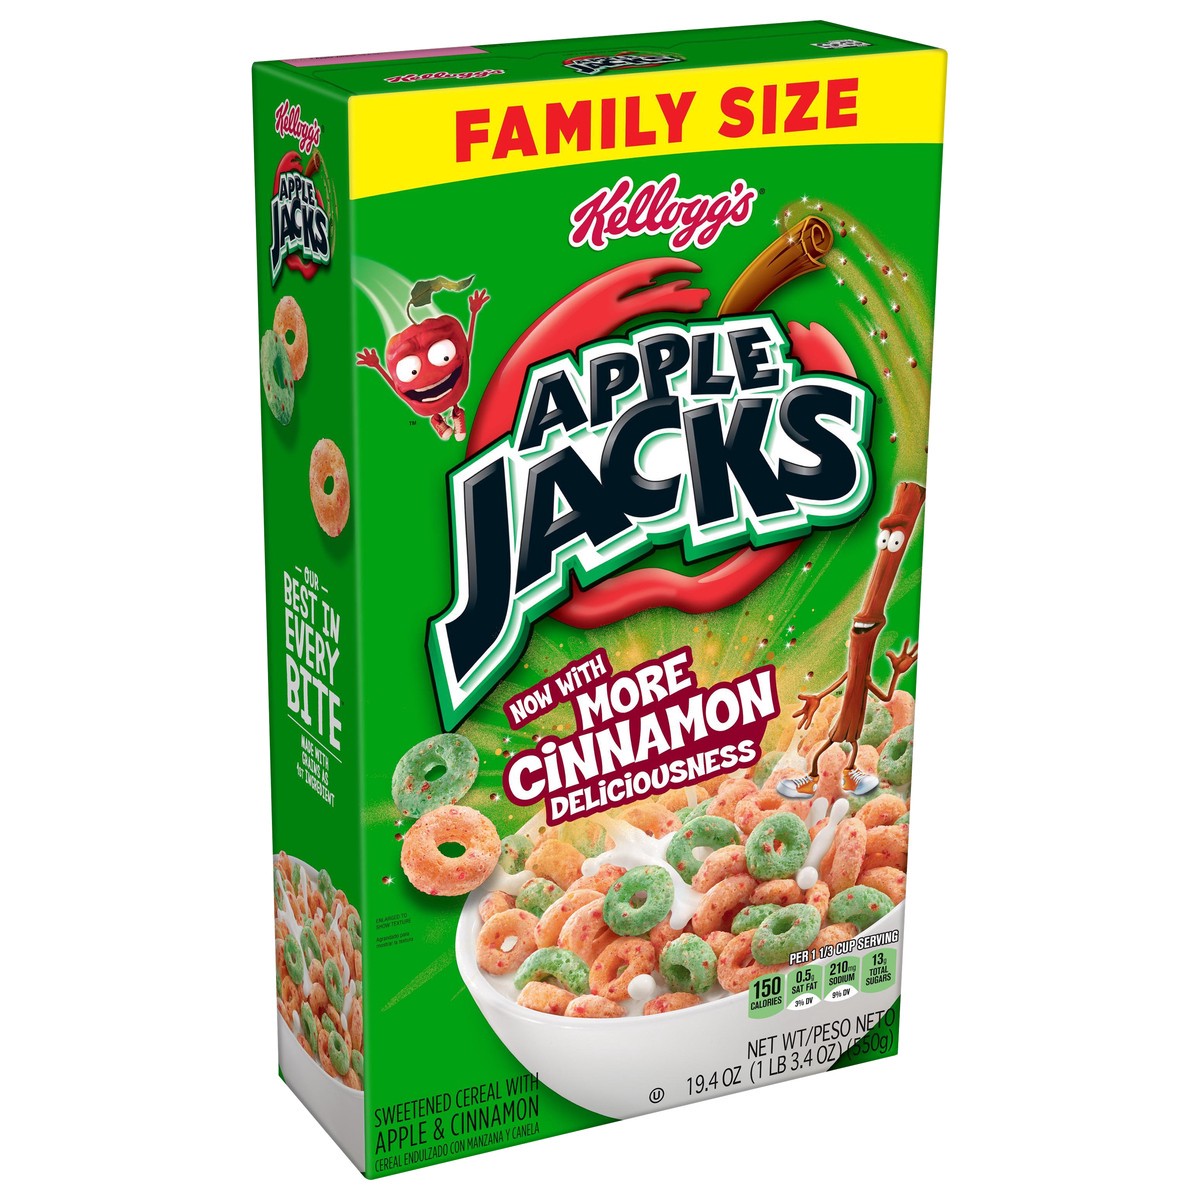 slide 2 of 8, Apple Jacks Kellogg's Apple Jacks Breakfast Cereal, 8 Vitamins and Minerals, Kids Snacks, Family Size, Original, 19.4oz Box, 1 Box, 19.4 oz